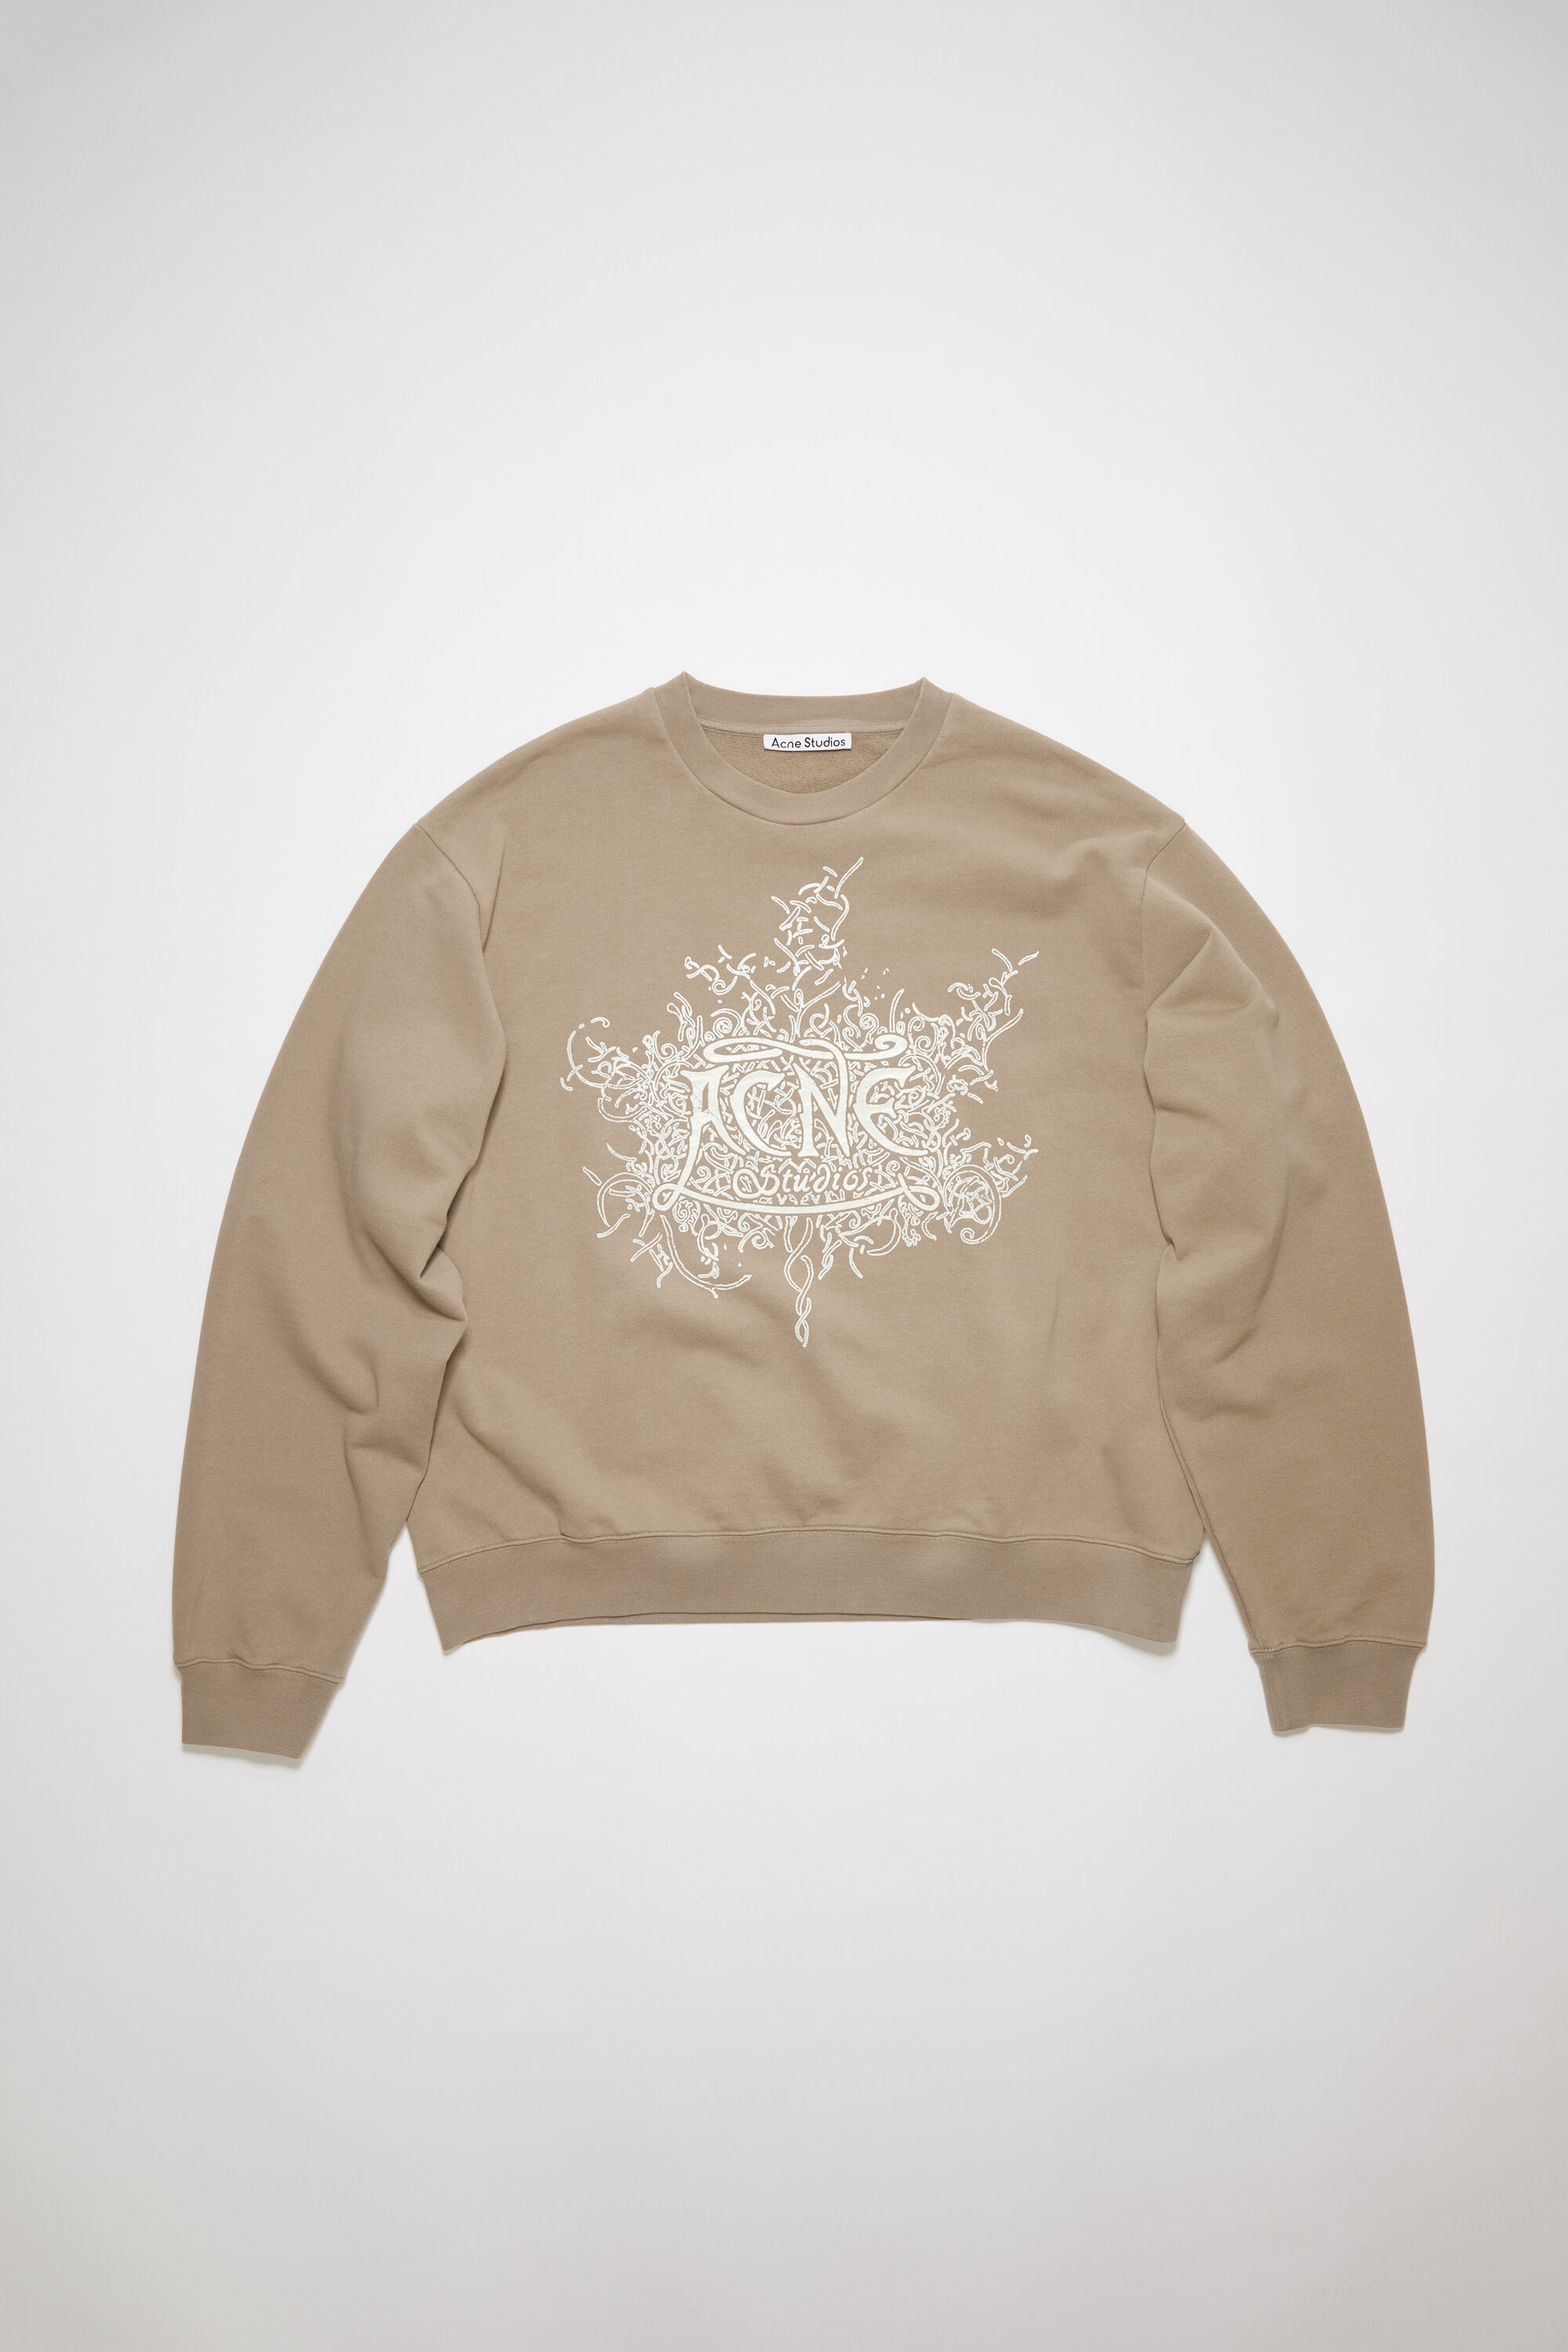 Acne Studios - Glow in the dark logo sweater - Dark beige